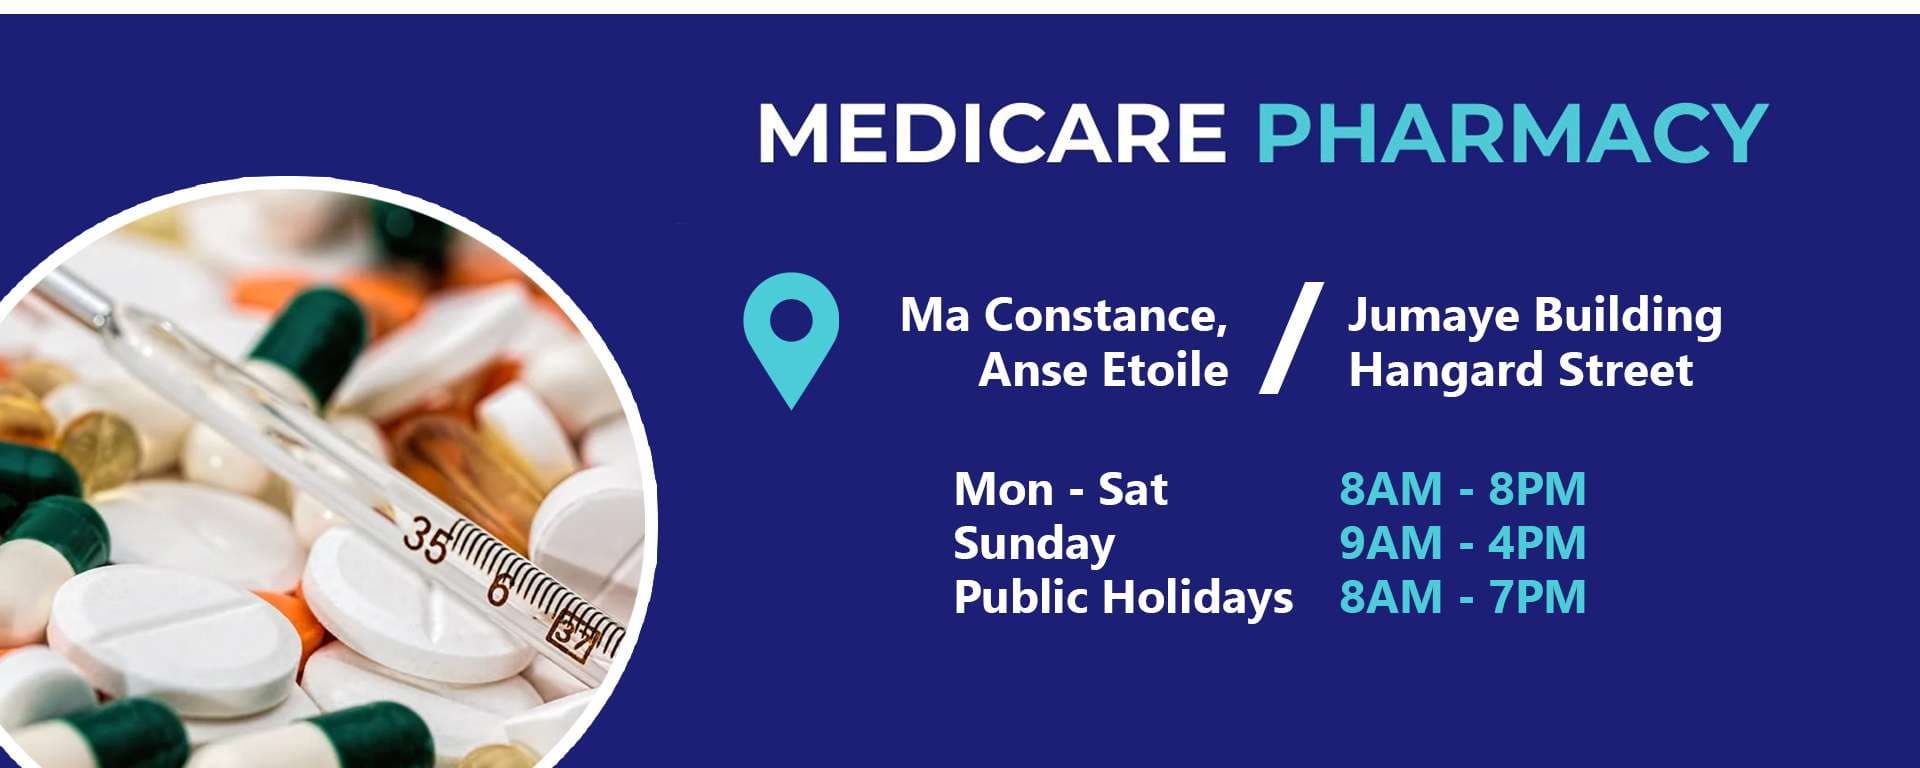 Medicare Pharmacy Seychelles - Anse Etoile